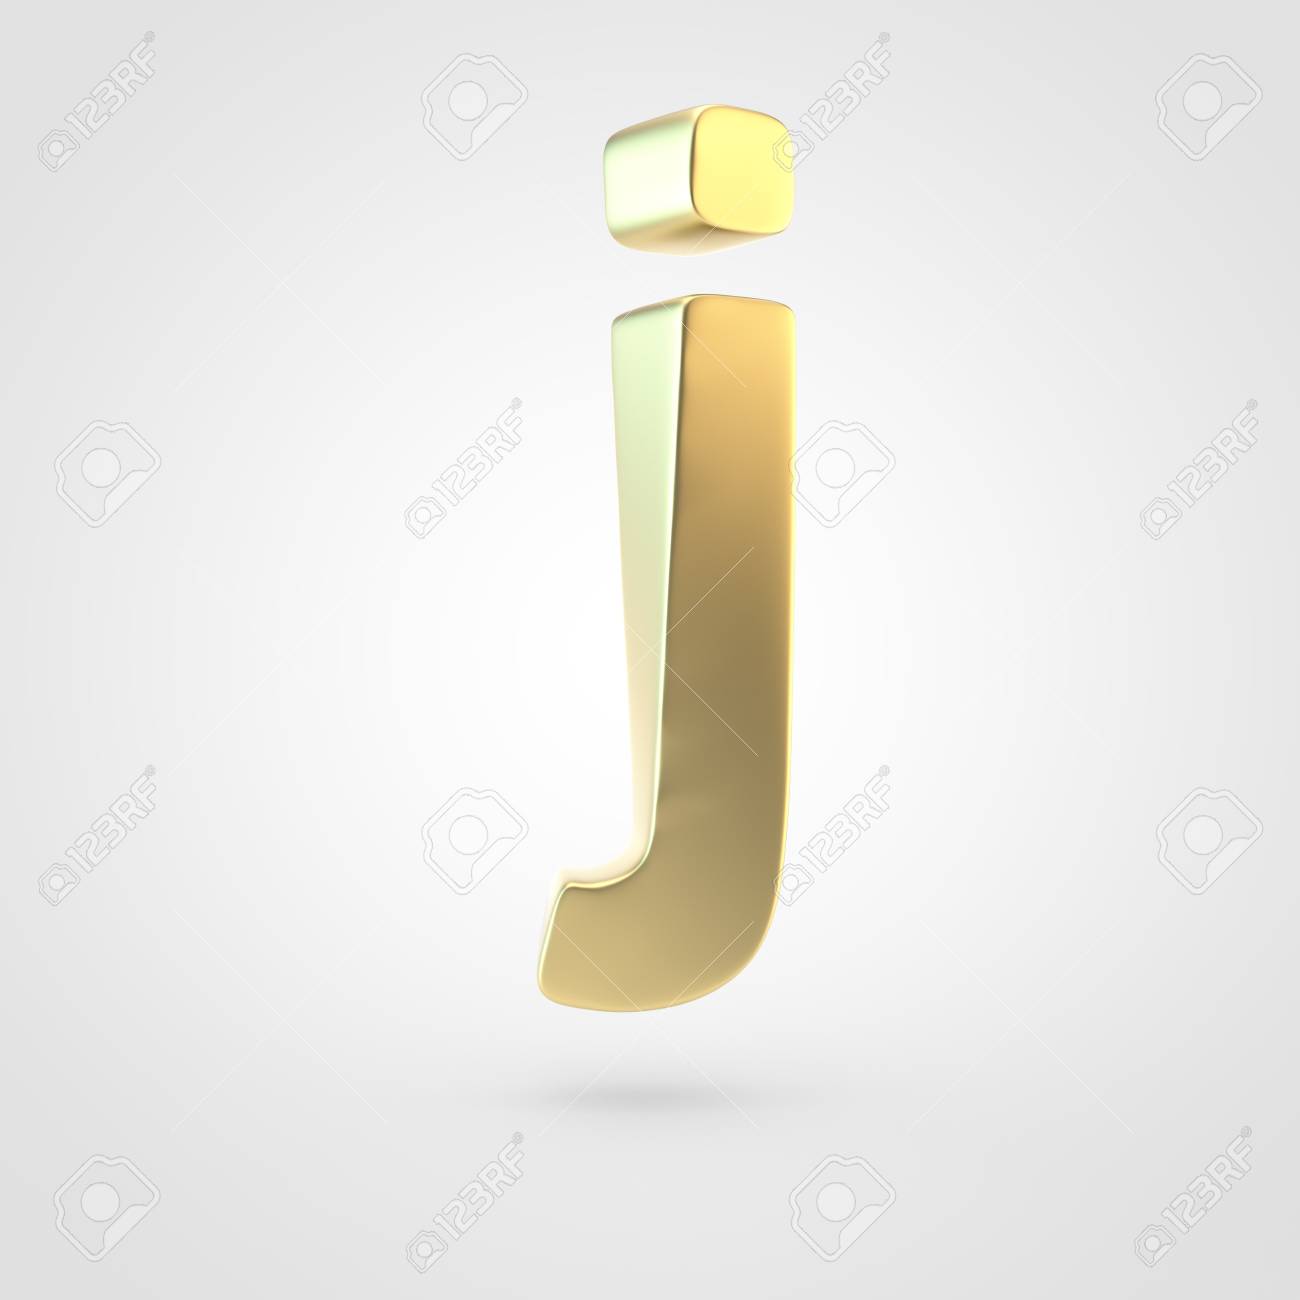 Golden Letter J Lowercase 3d Rendering Of Matted Font